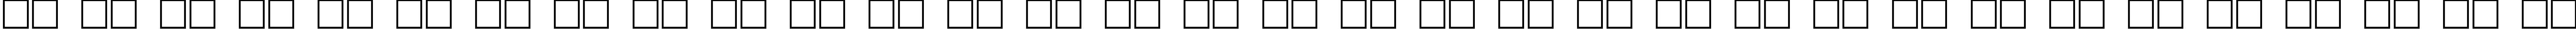 Пример написания русского алфавита шрифтом Chancery